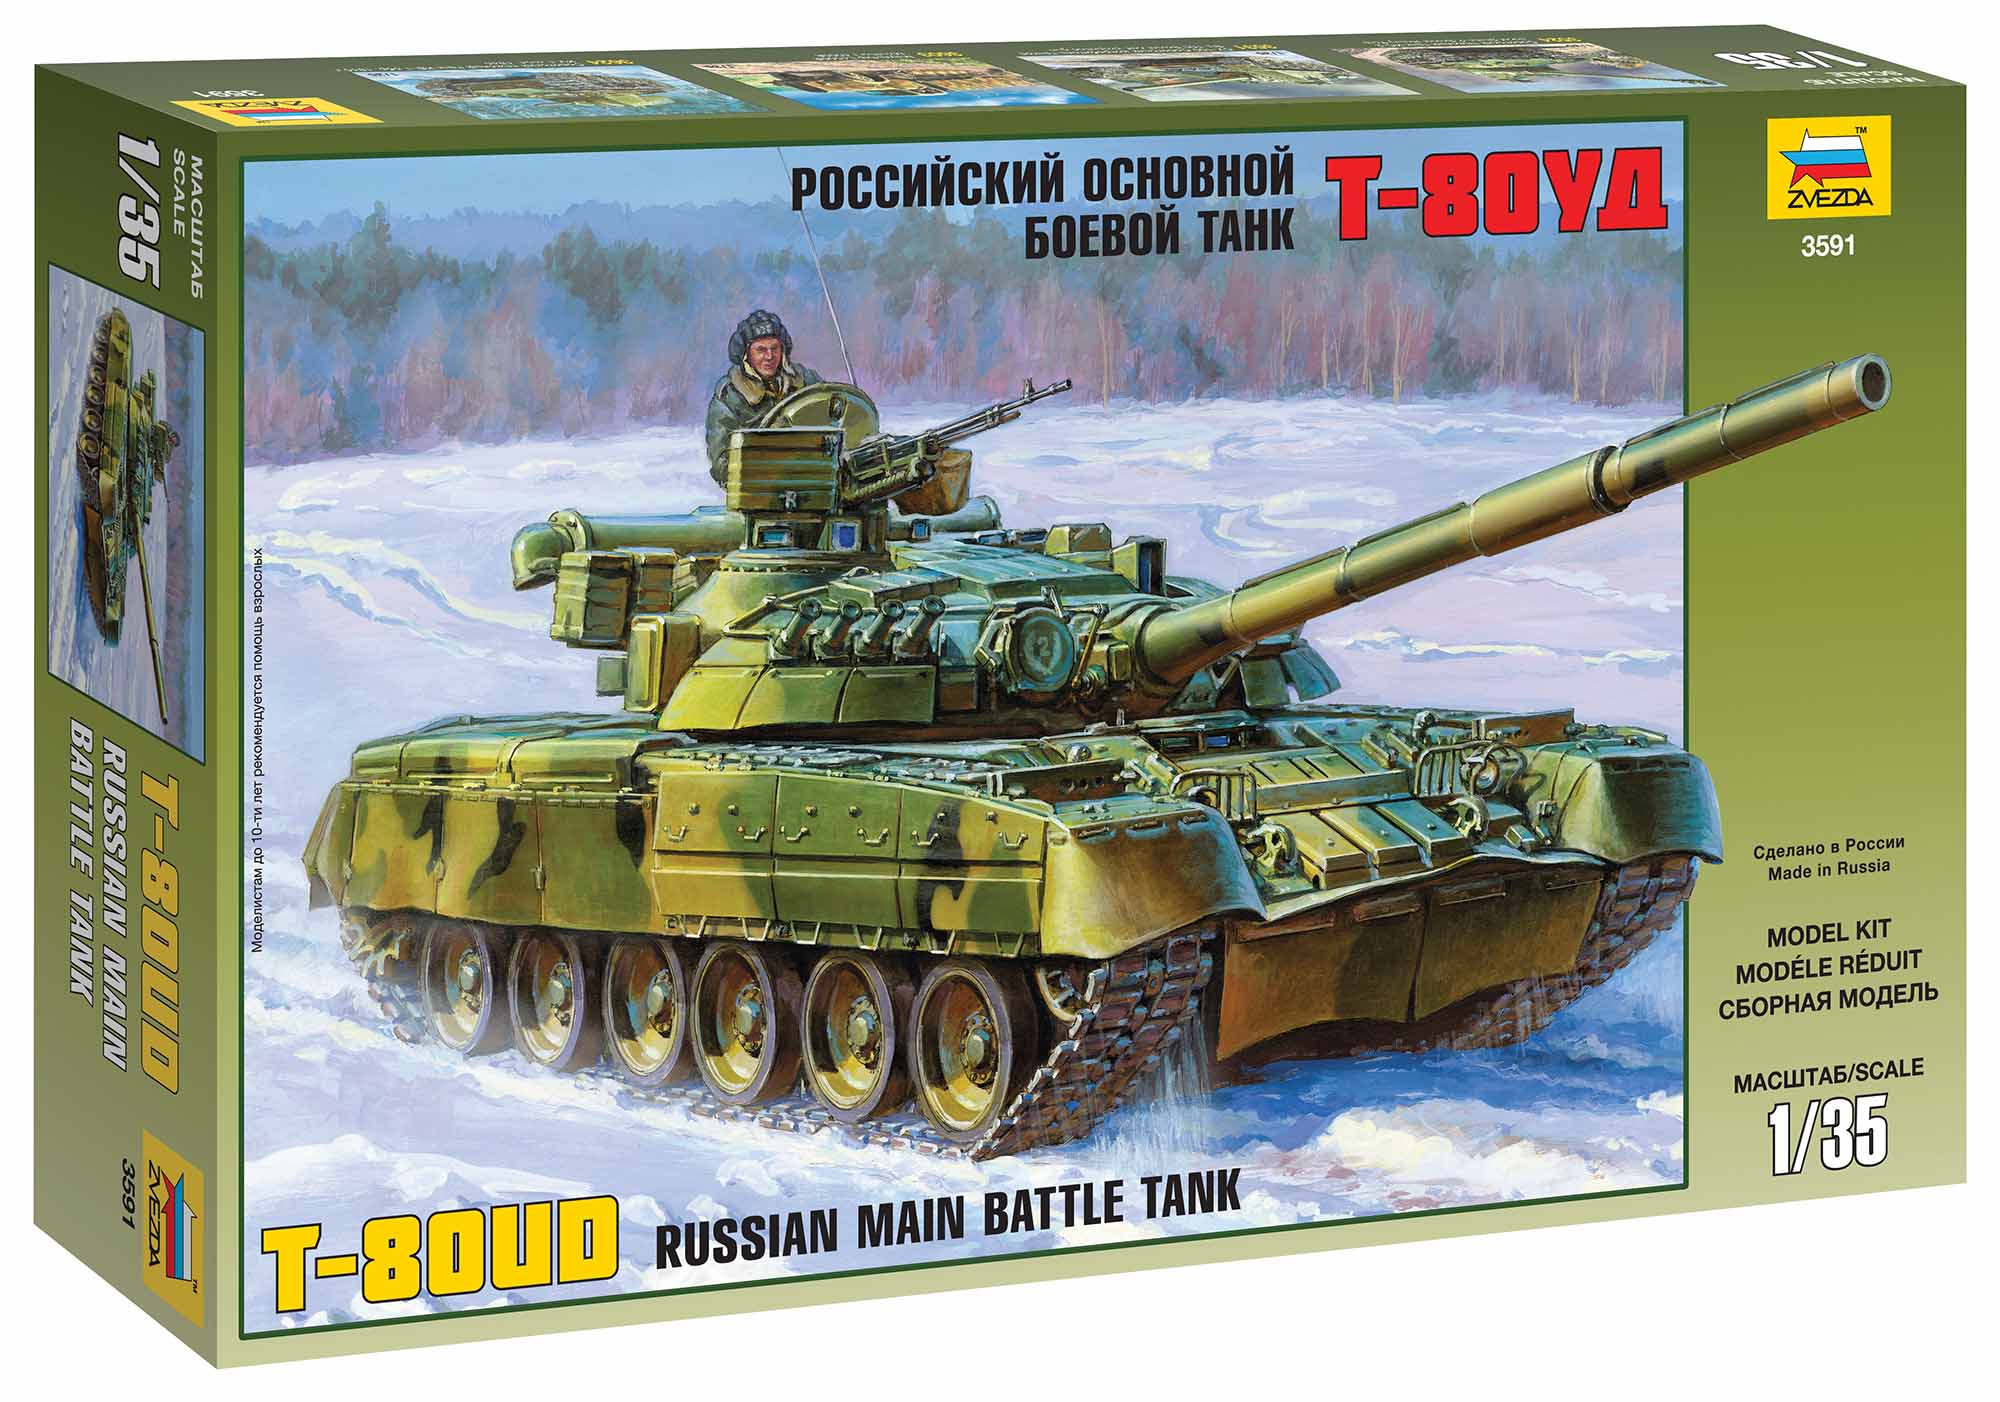 Model Kit tank 3591 - Russian Main Battle Tank T-80UD (1:35)